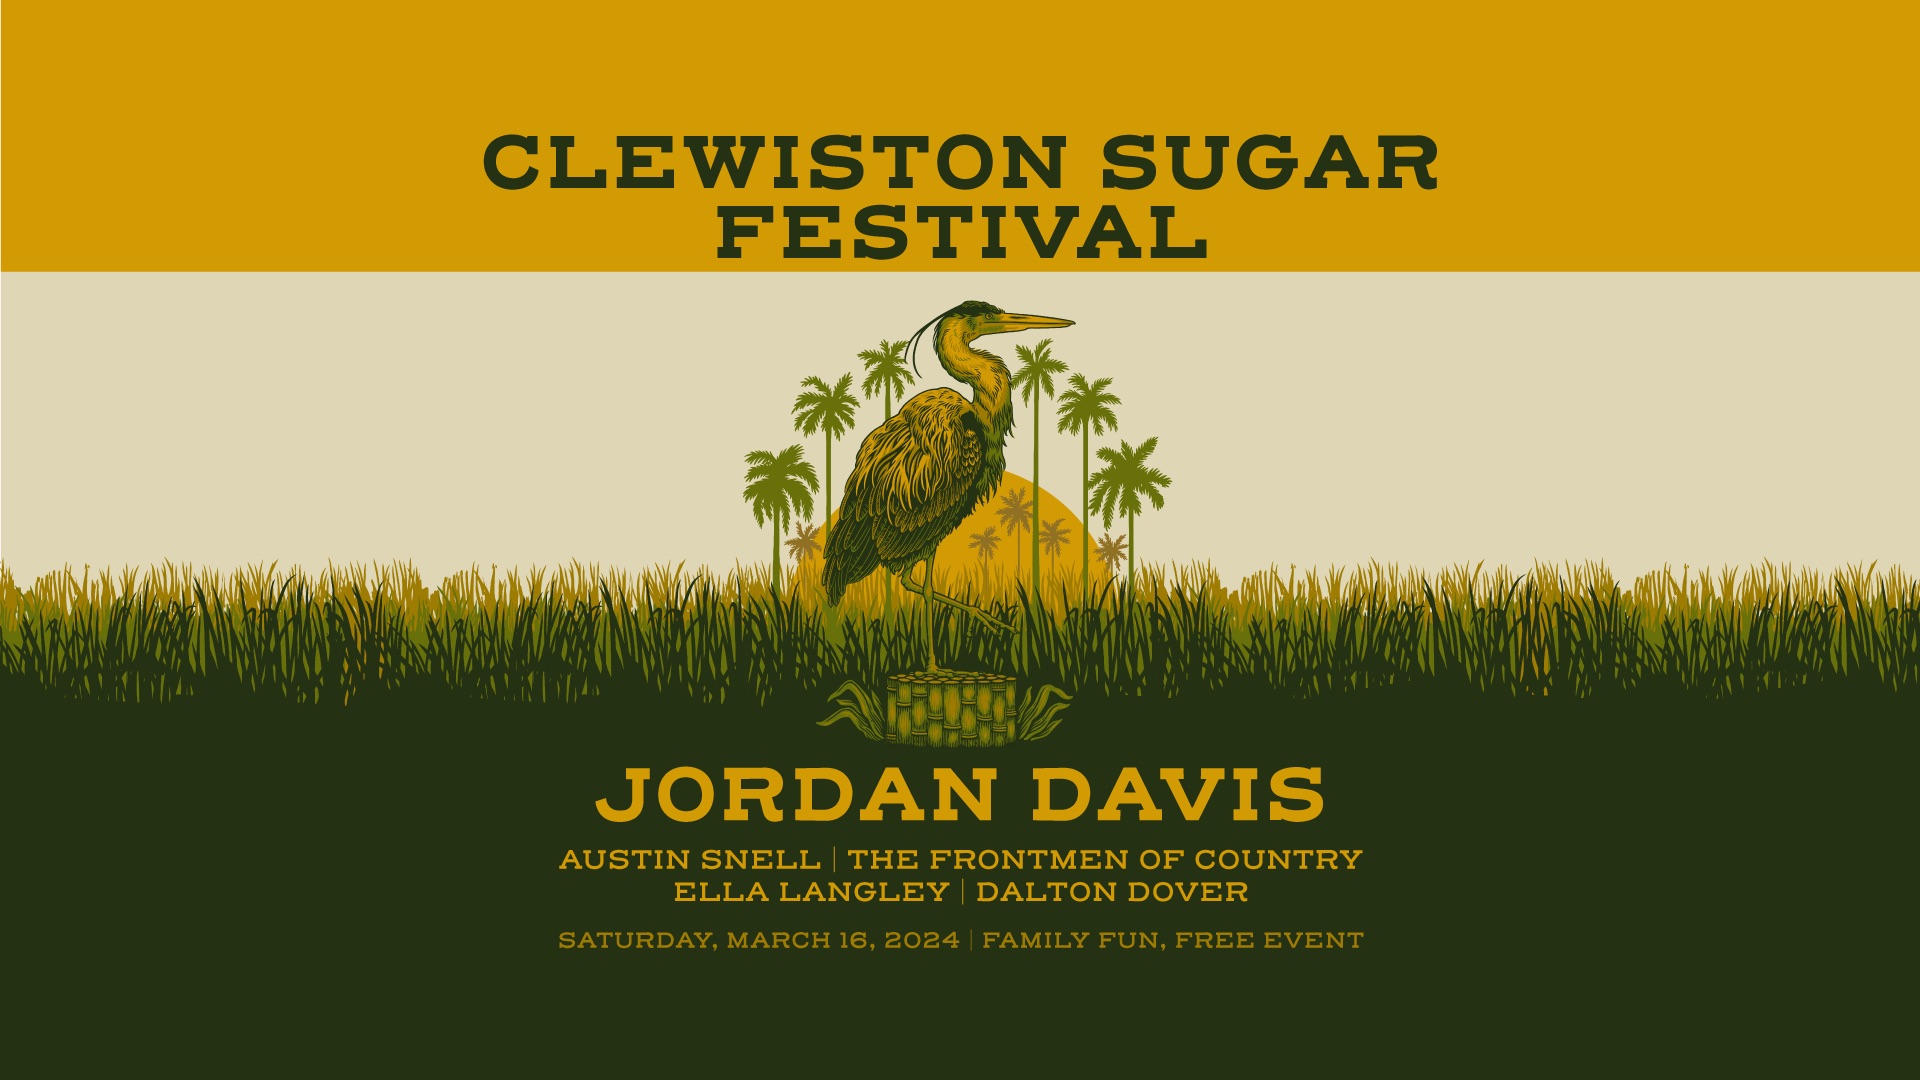 Clewiston Sugar Festival - Clewiston, FL